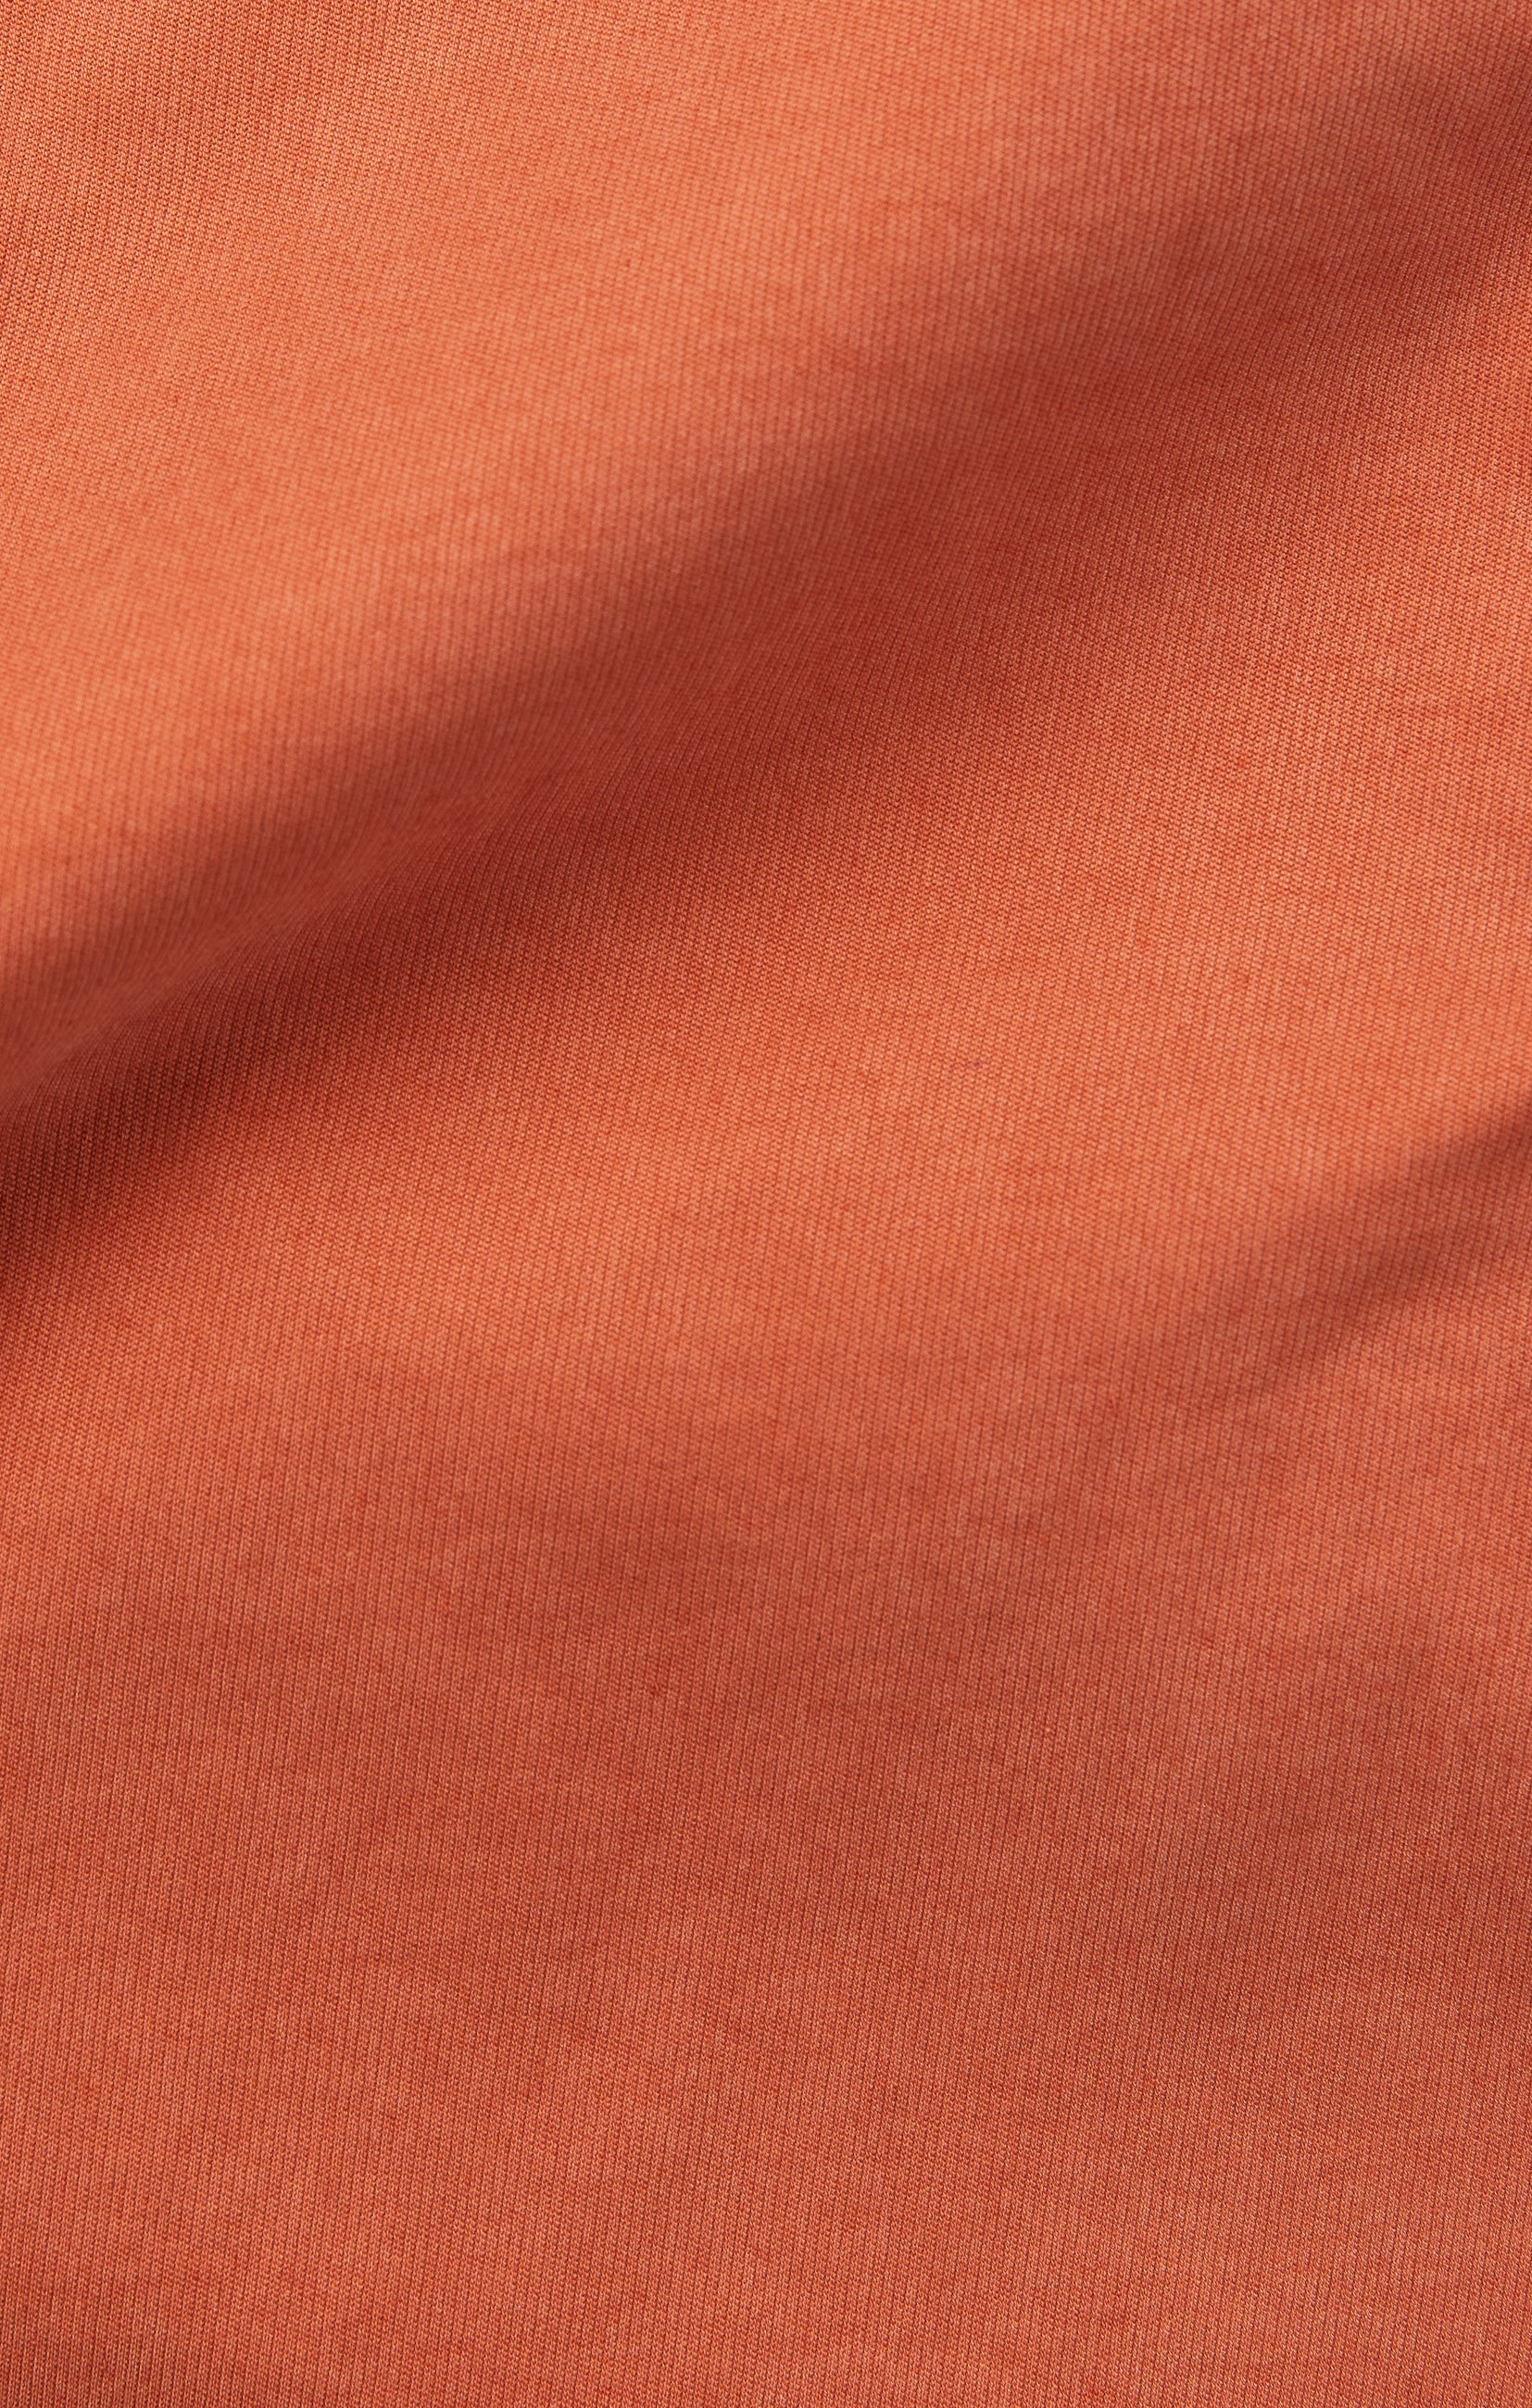 Arizona Shorts In Orange Rust Soft Touch Image 6